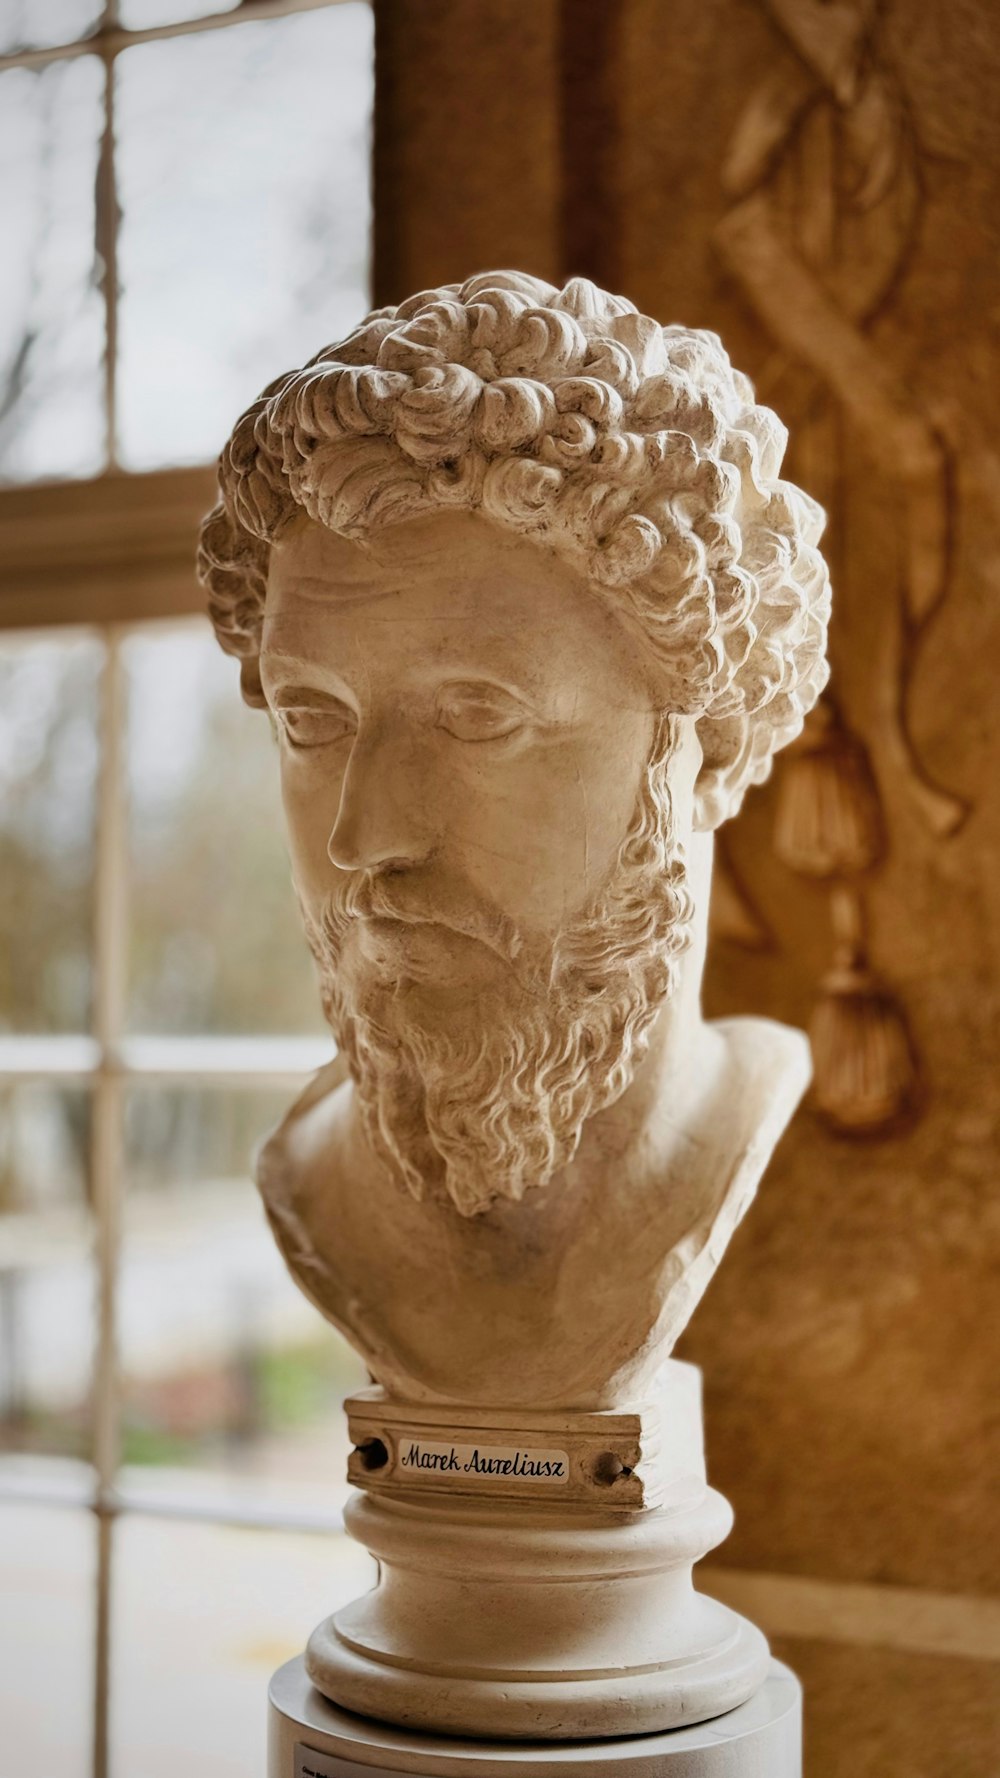 a marble bust of a man with a beard